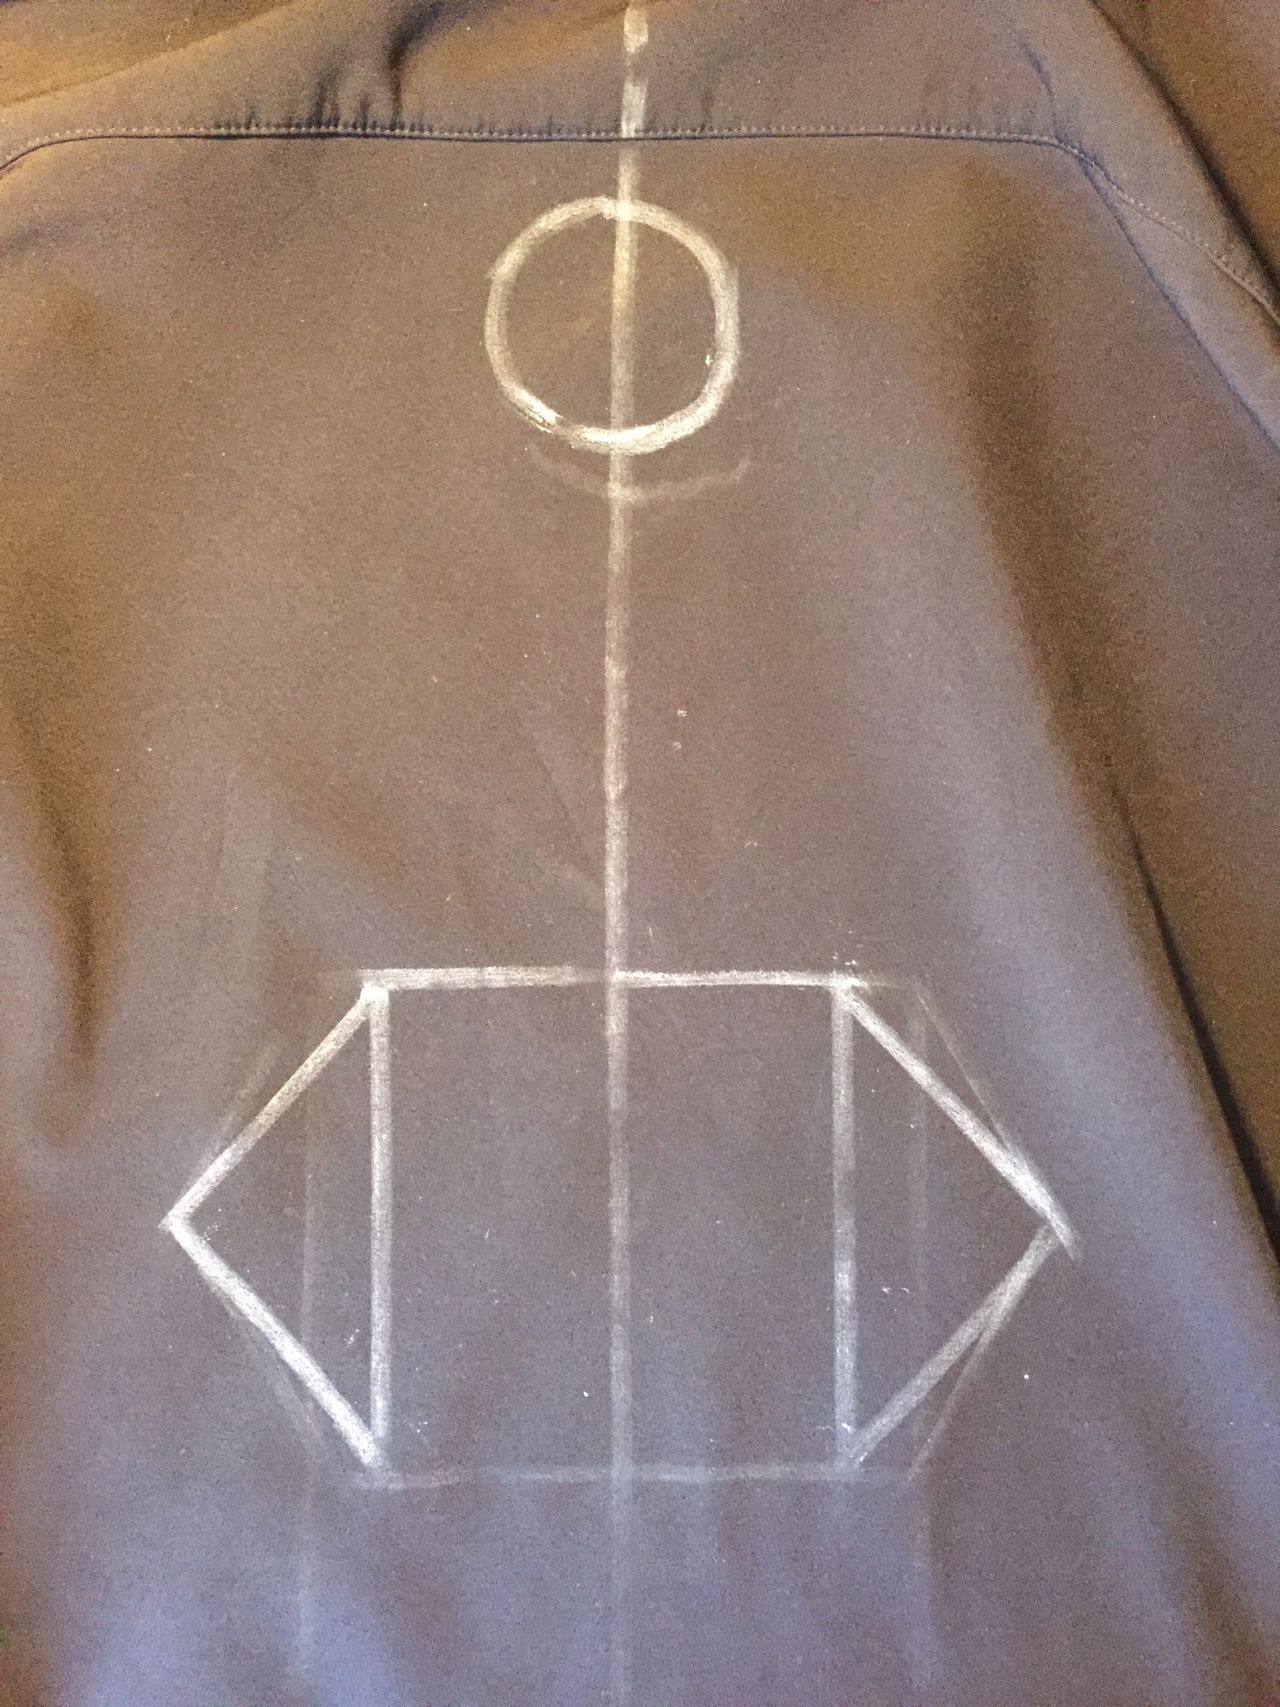 Chalk diagram drawn onto jacket.